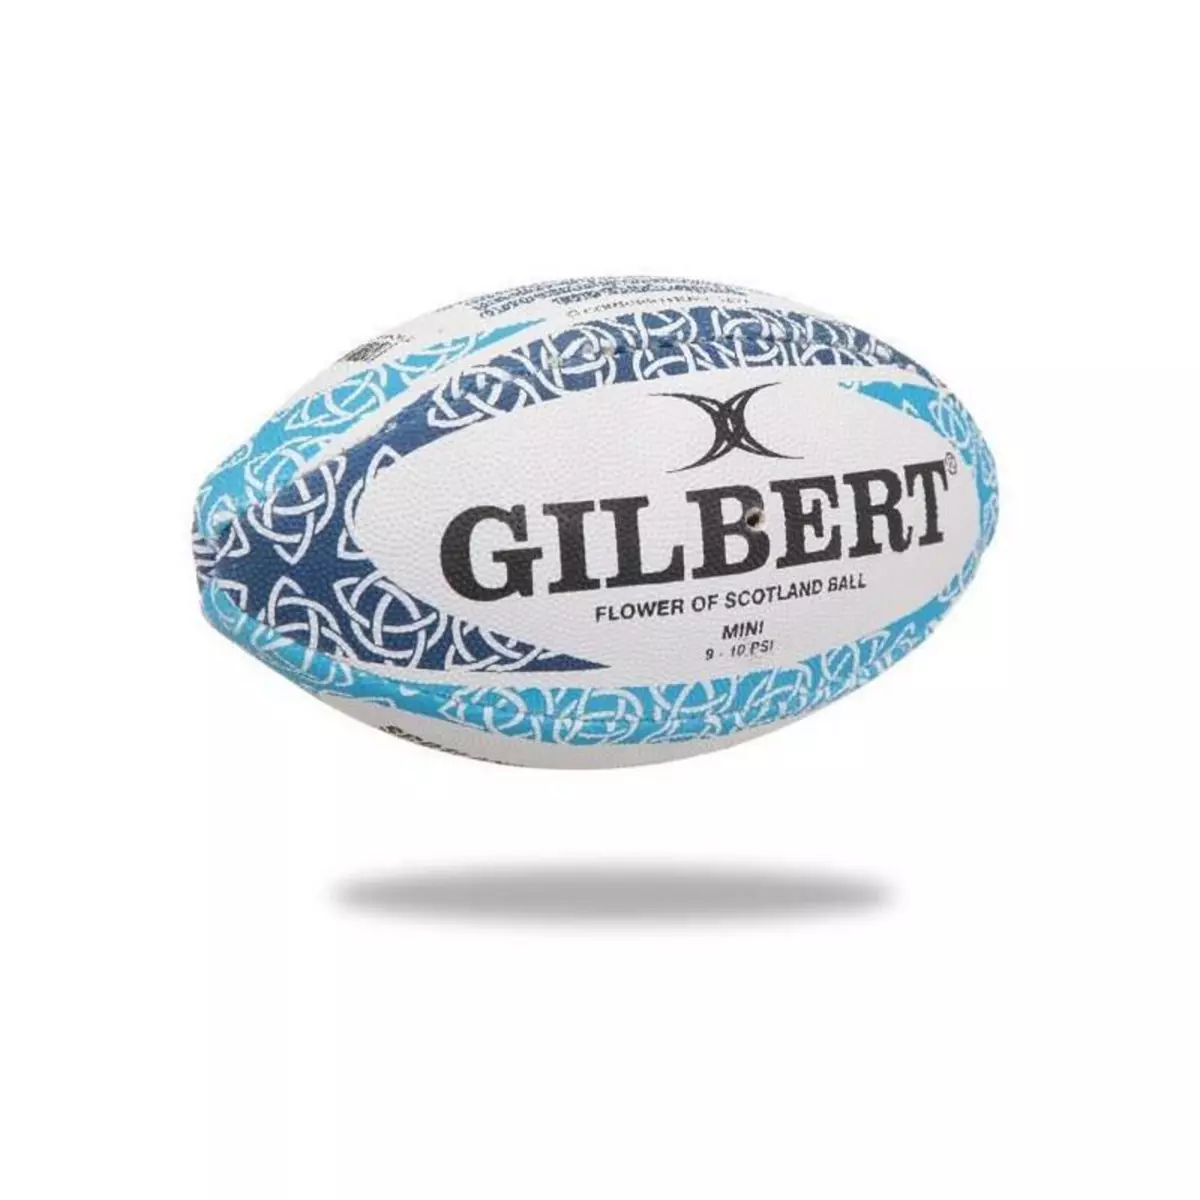 GILBERT GILBERT Ballon de rugby MASCOTTES - Ecosse Flower of Scotland - Taille Mini